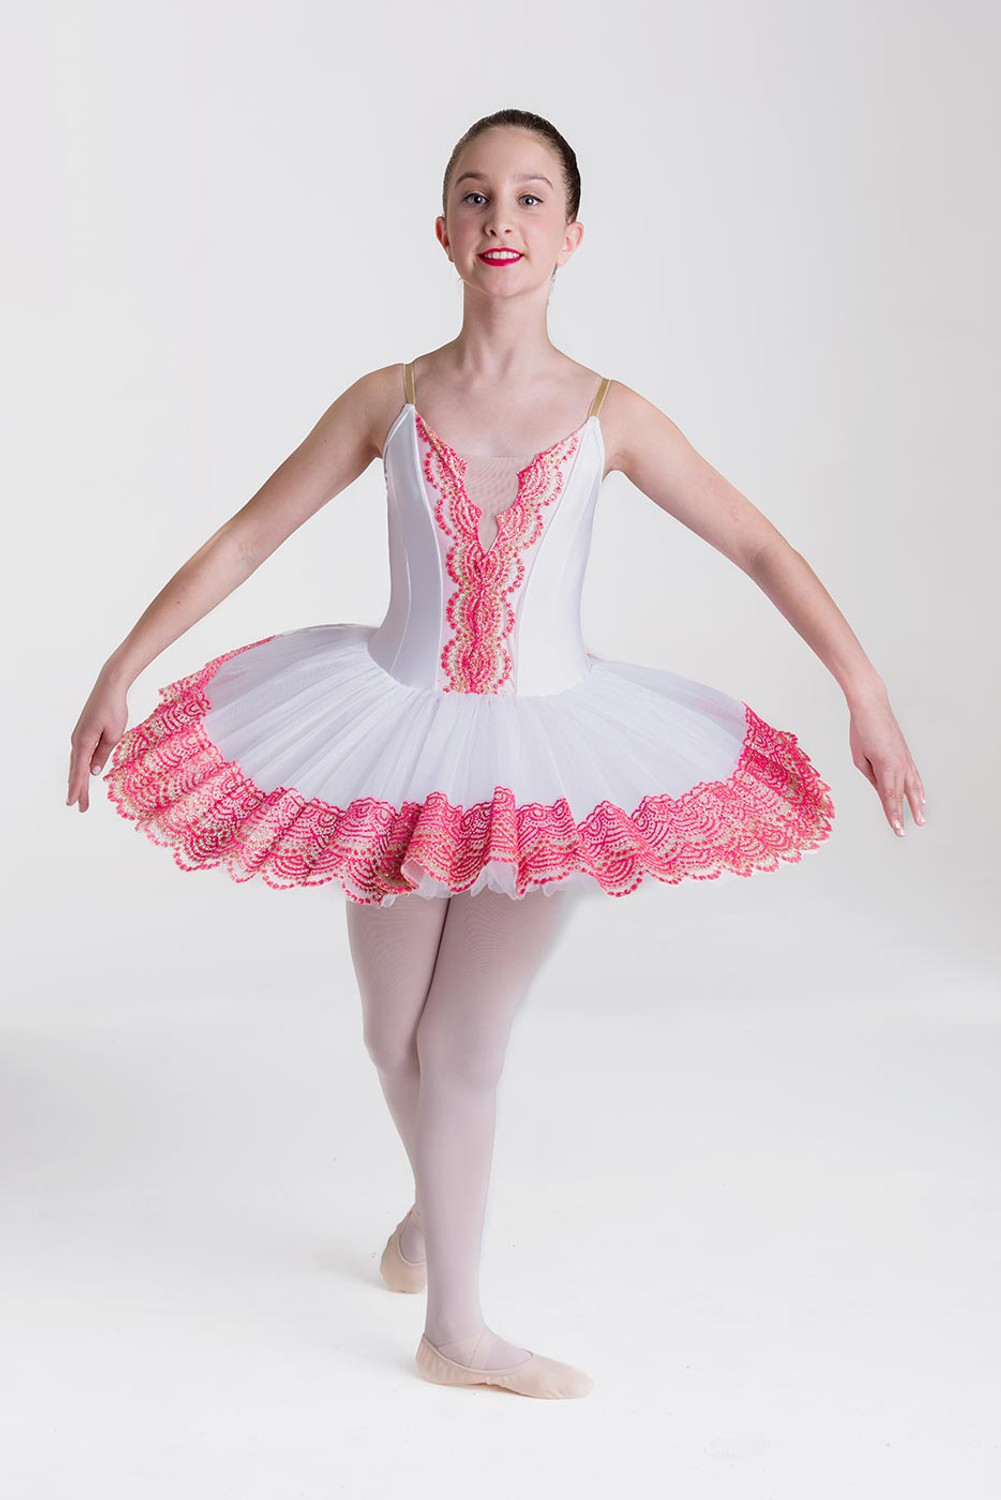 Claudia Dean, Royal Ballet  Dance outfits, Dance photography